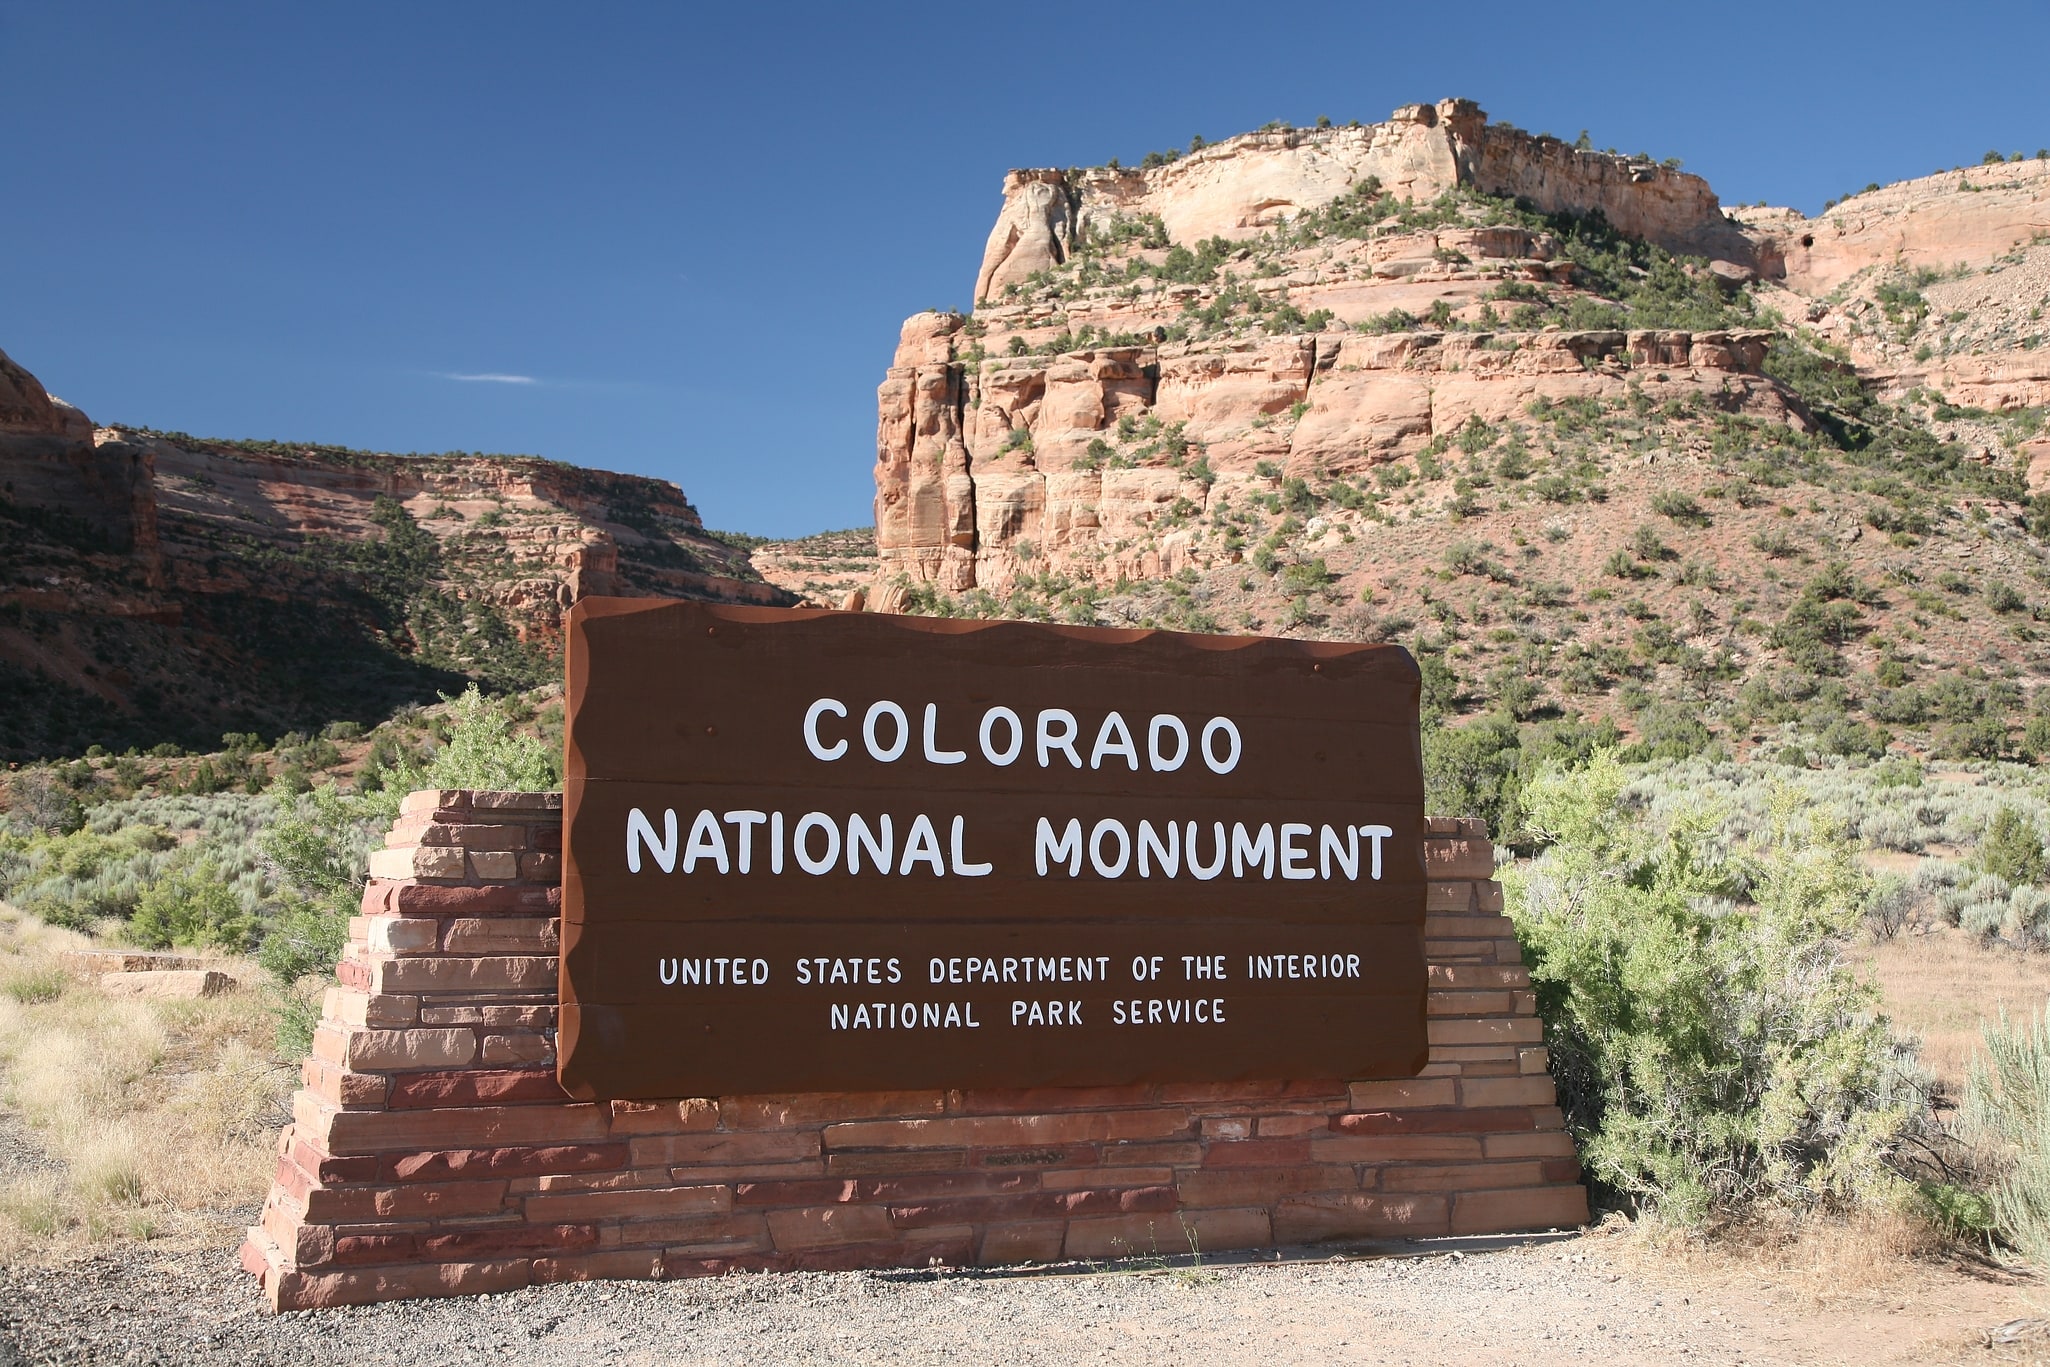 Colorado National Monument, United States